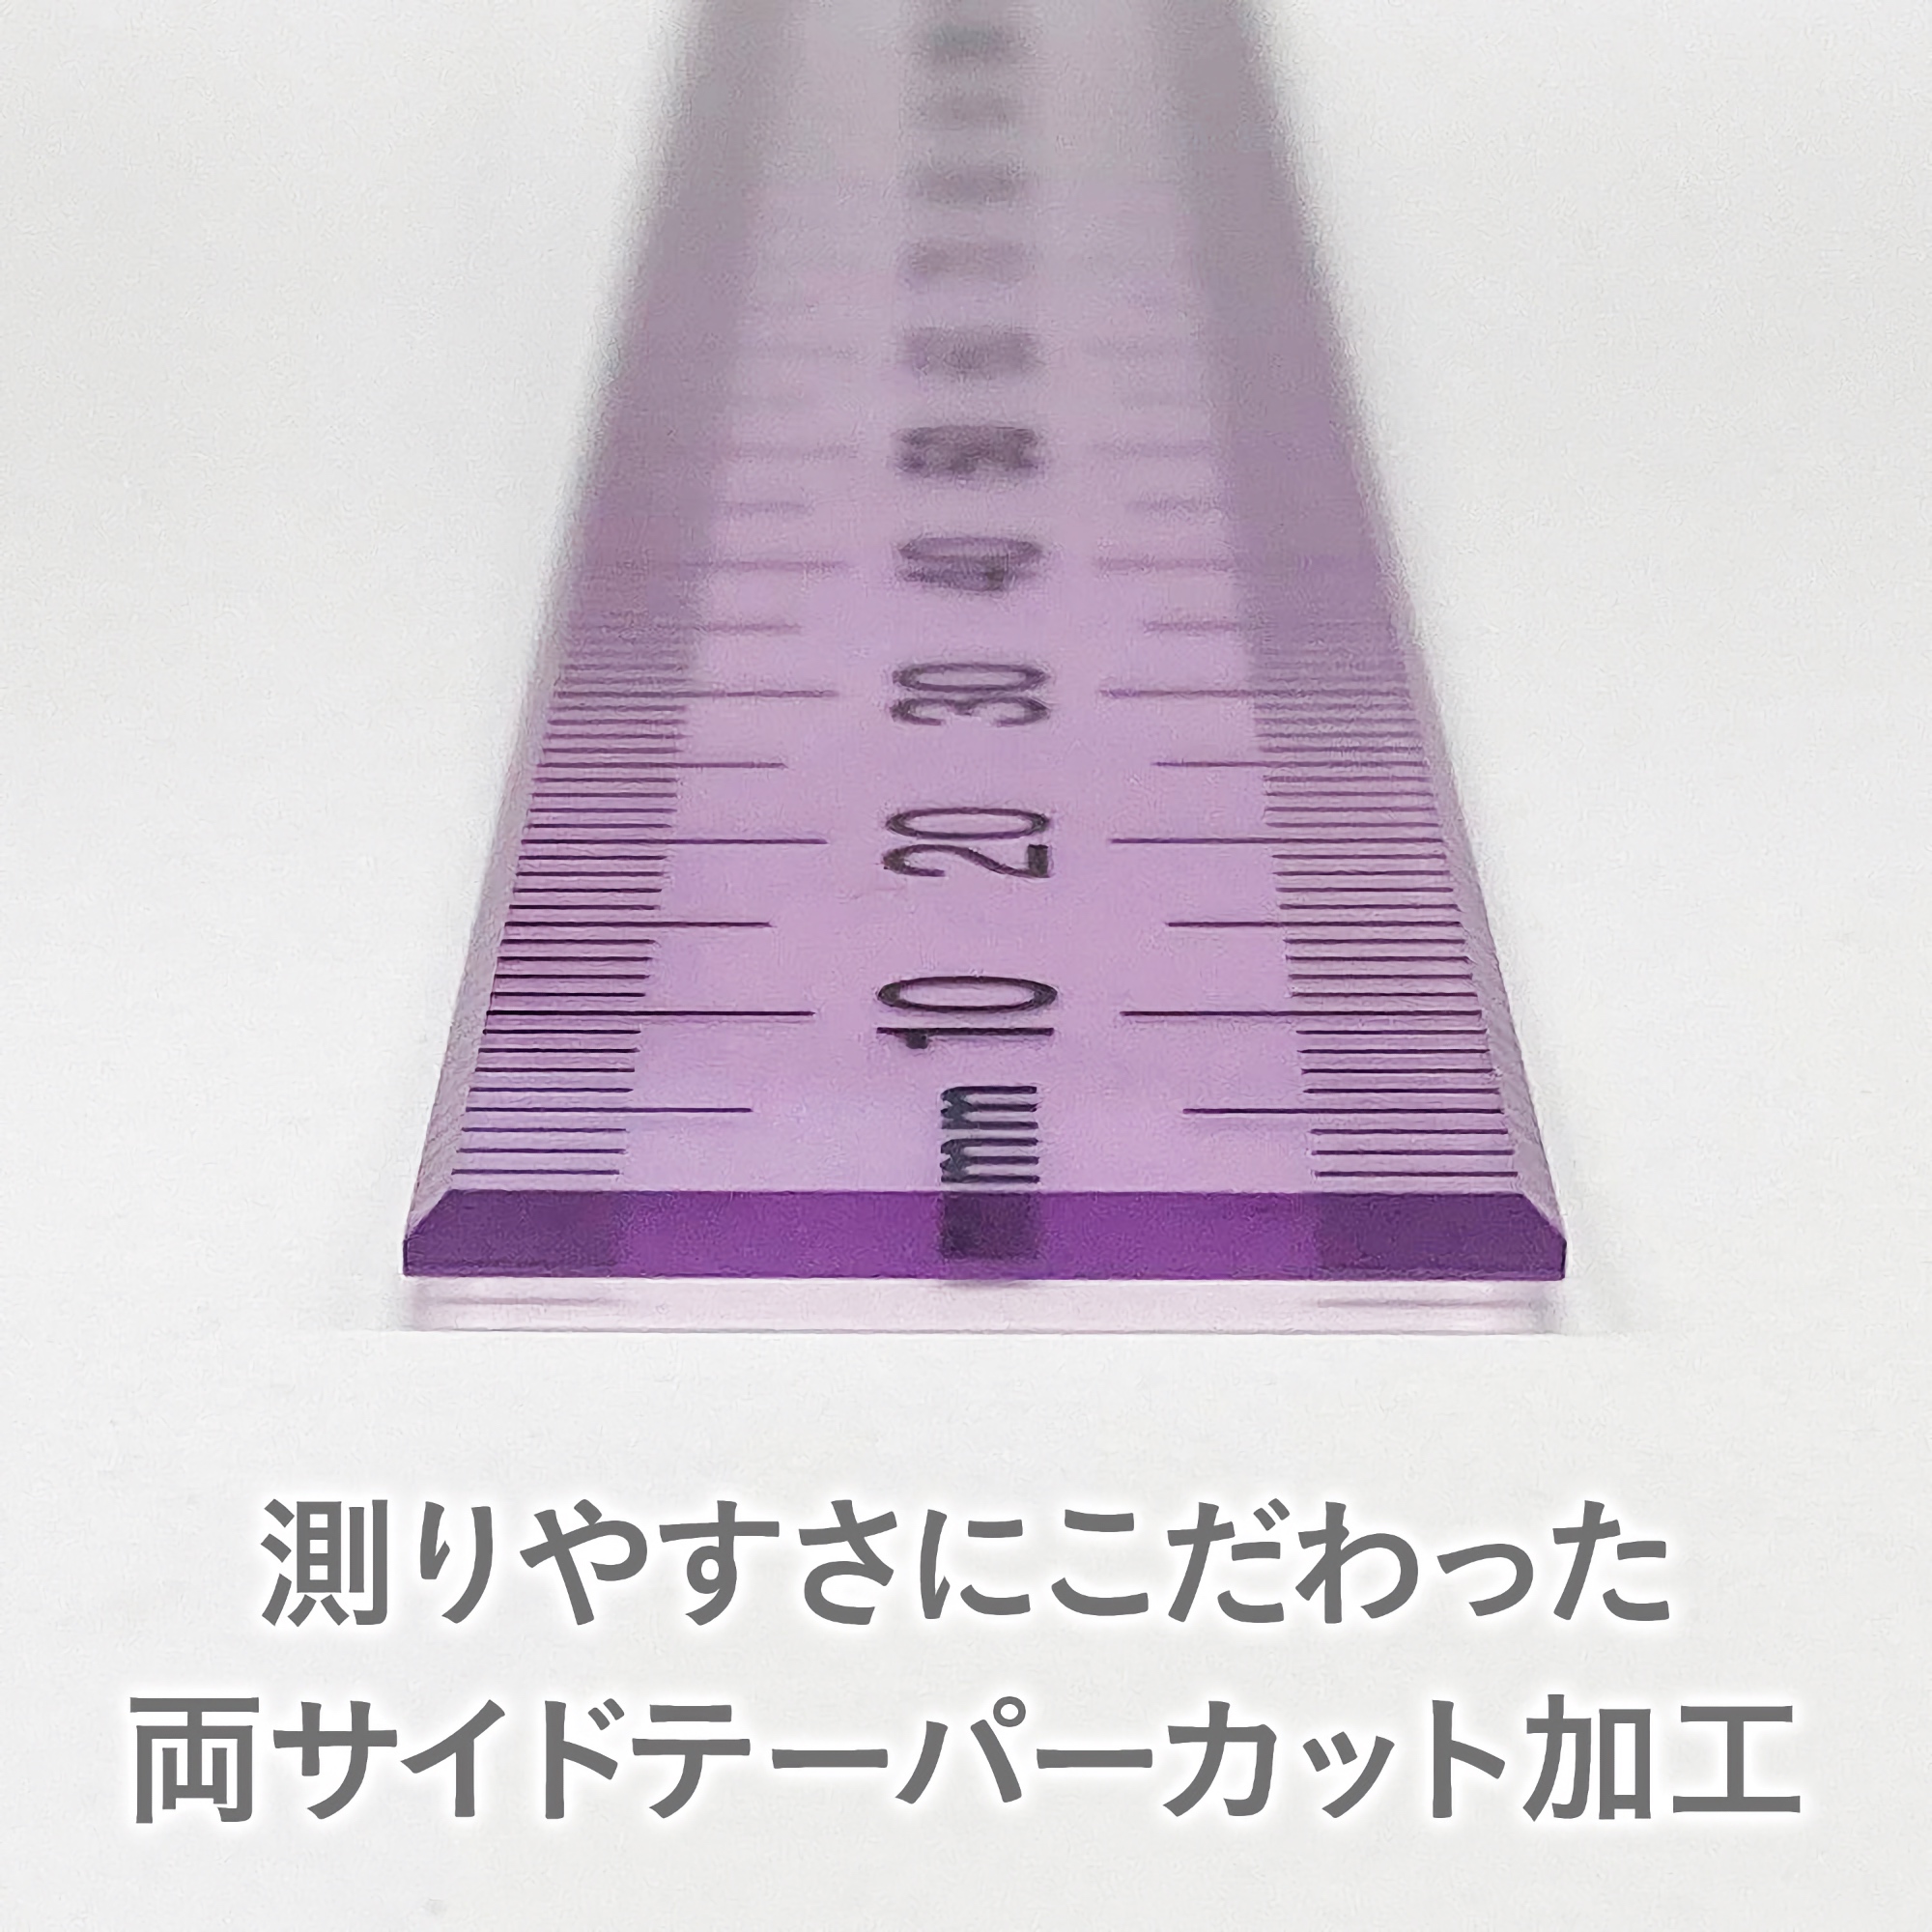 Kyoei Orions Nuance Color Ruler 16 cm Violet